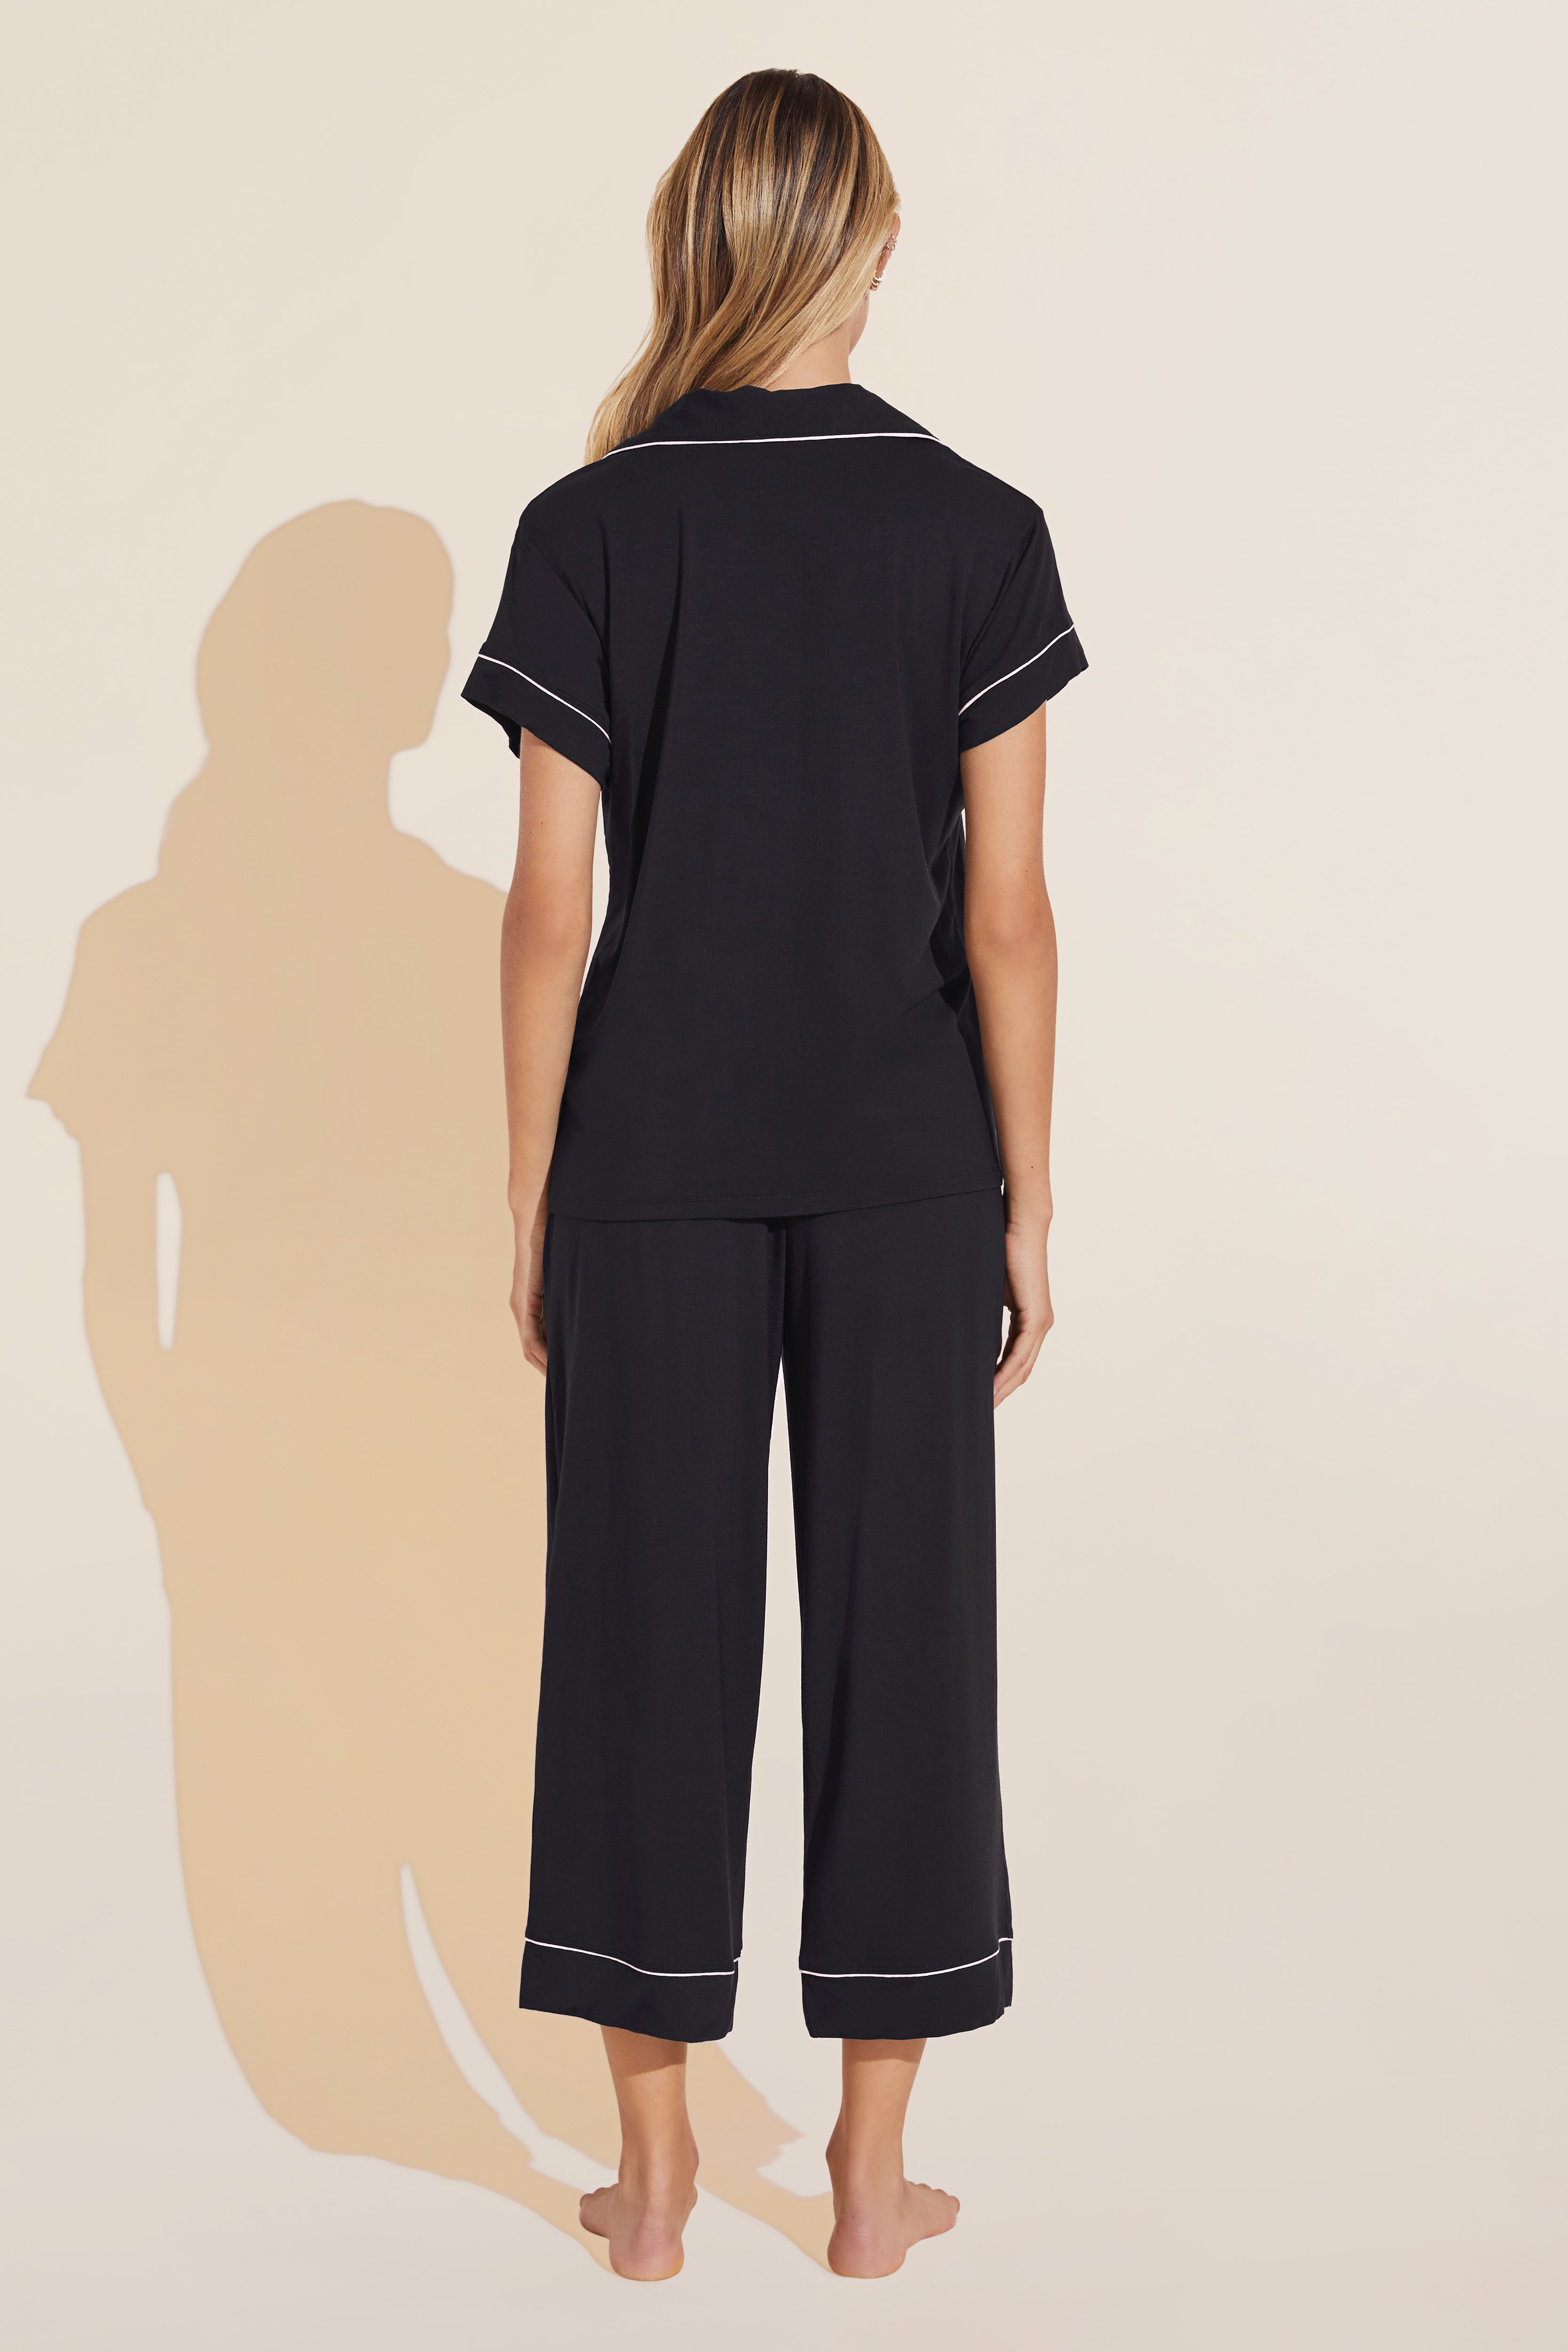 Gisele TENCEL™ Modal Short Sleeve Cropped PJ Set - Black/Sorbet Pink